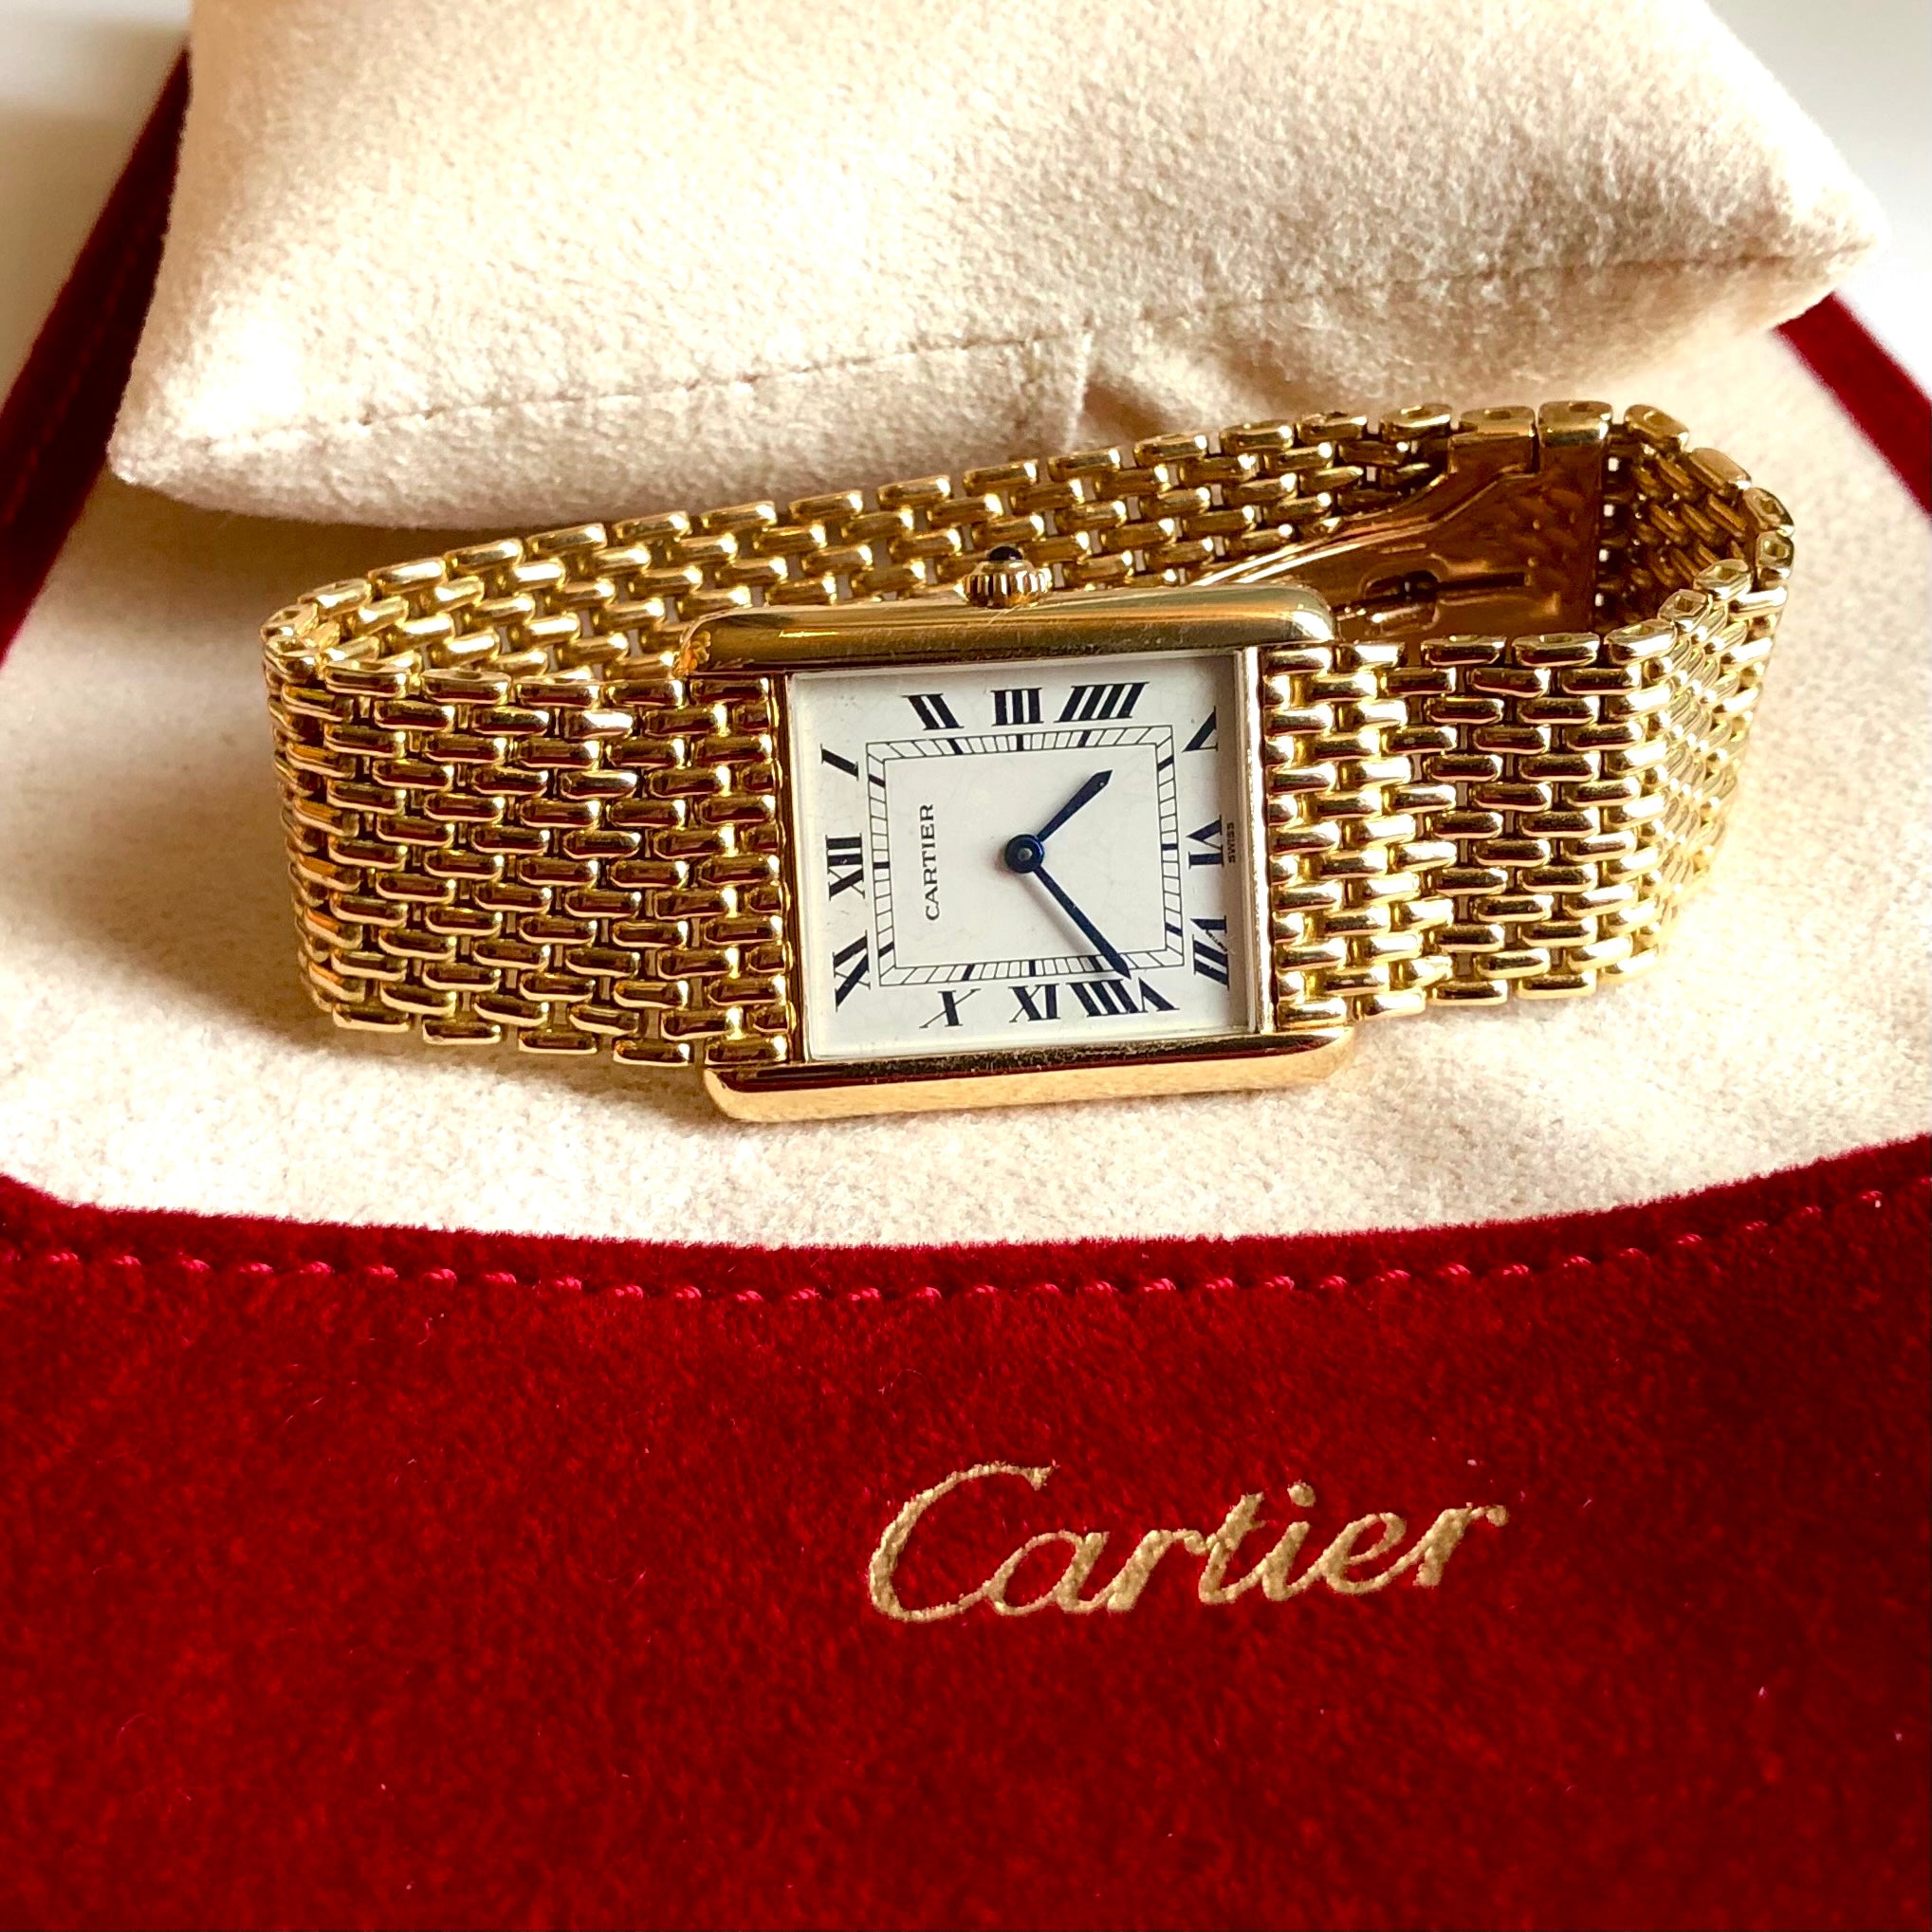 Cartier - Tank Louis Cartier on bracelet